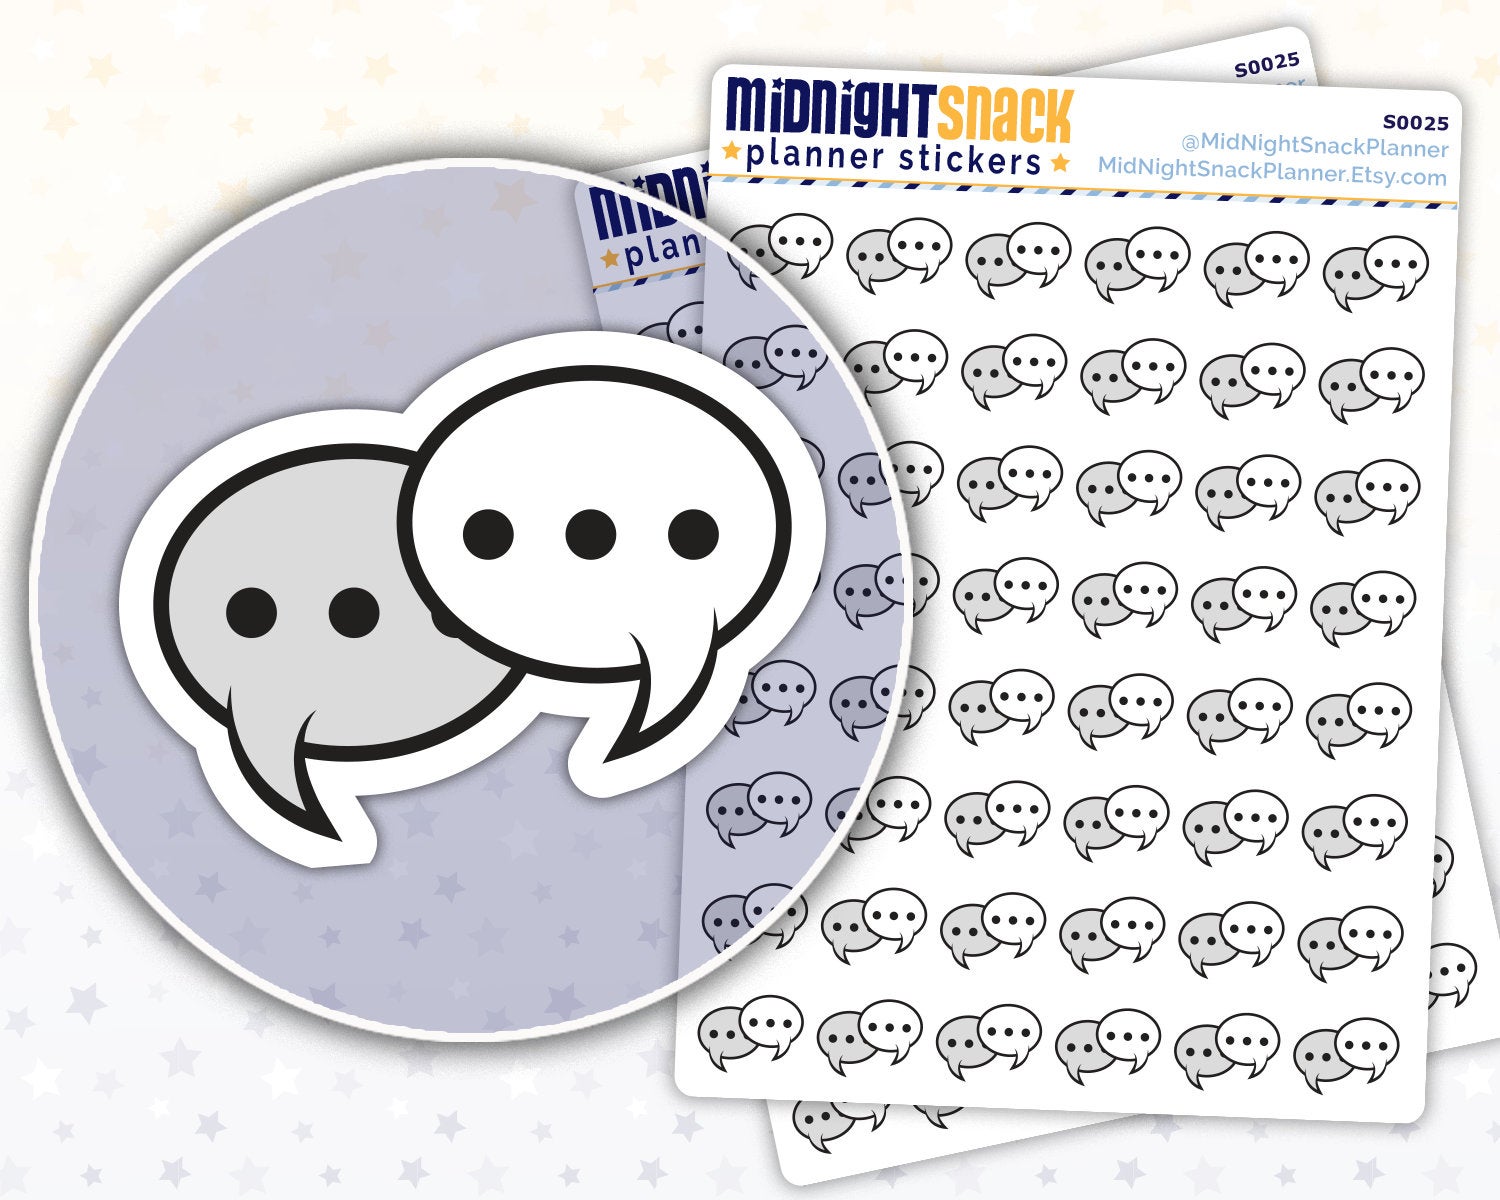 Speech Bubble Icon: Business Meeting Planner Sticker Midnight Snack Planner